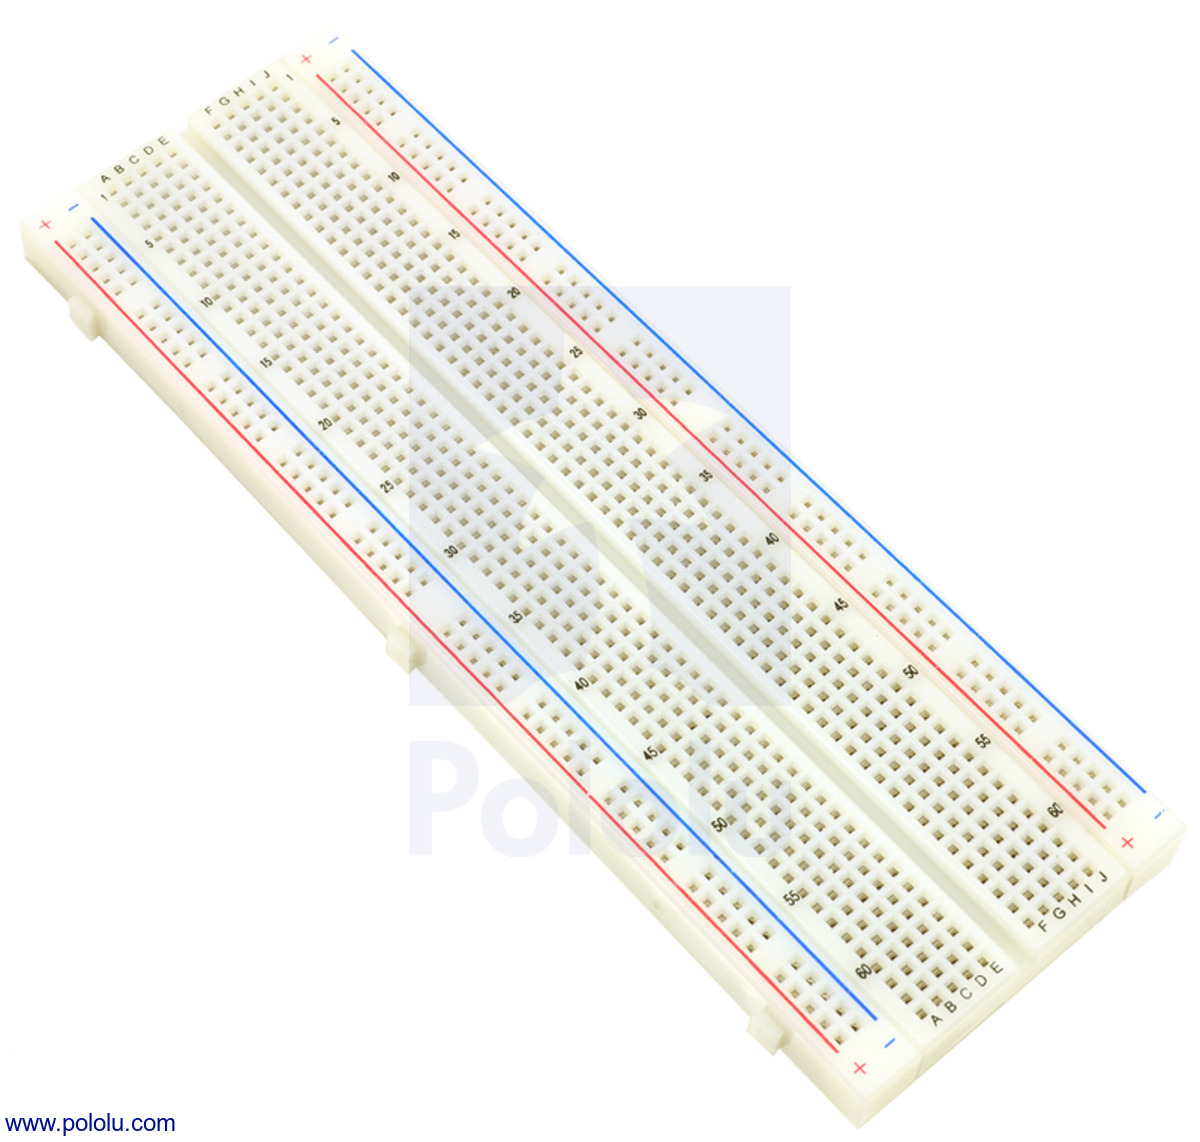 Qunqi 4packs 830 Tie Point PCB Solderless Breadboard for Arduino Raspberry Pi 